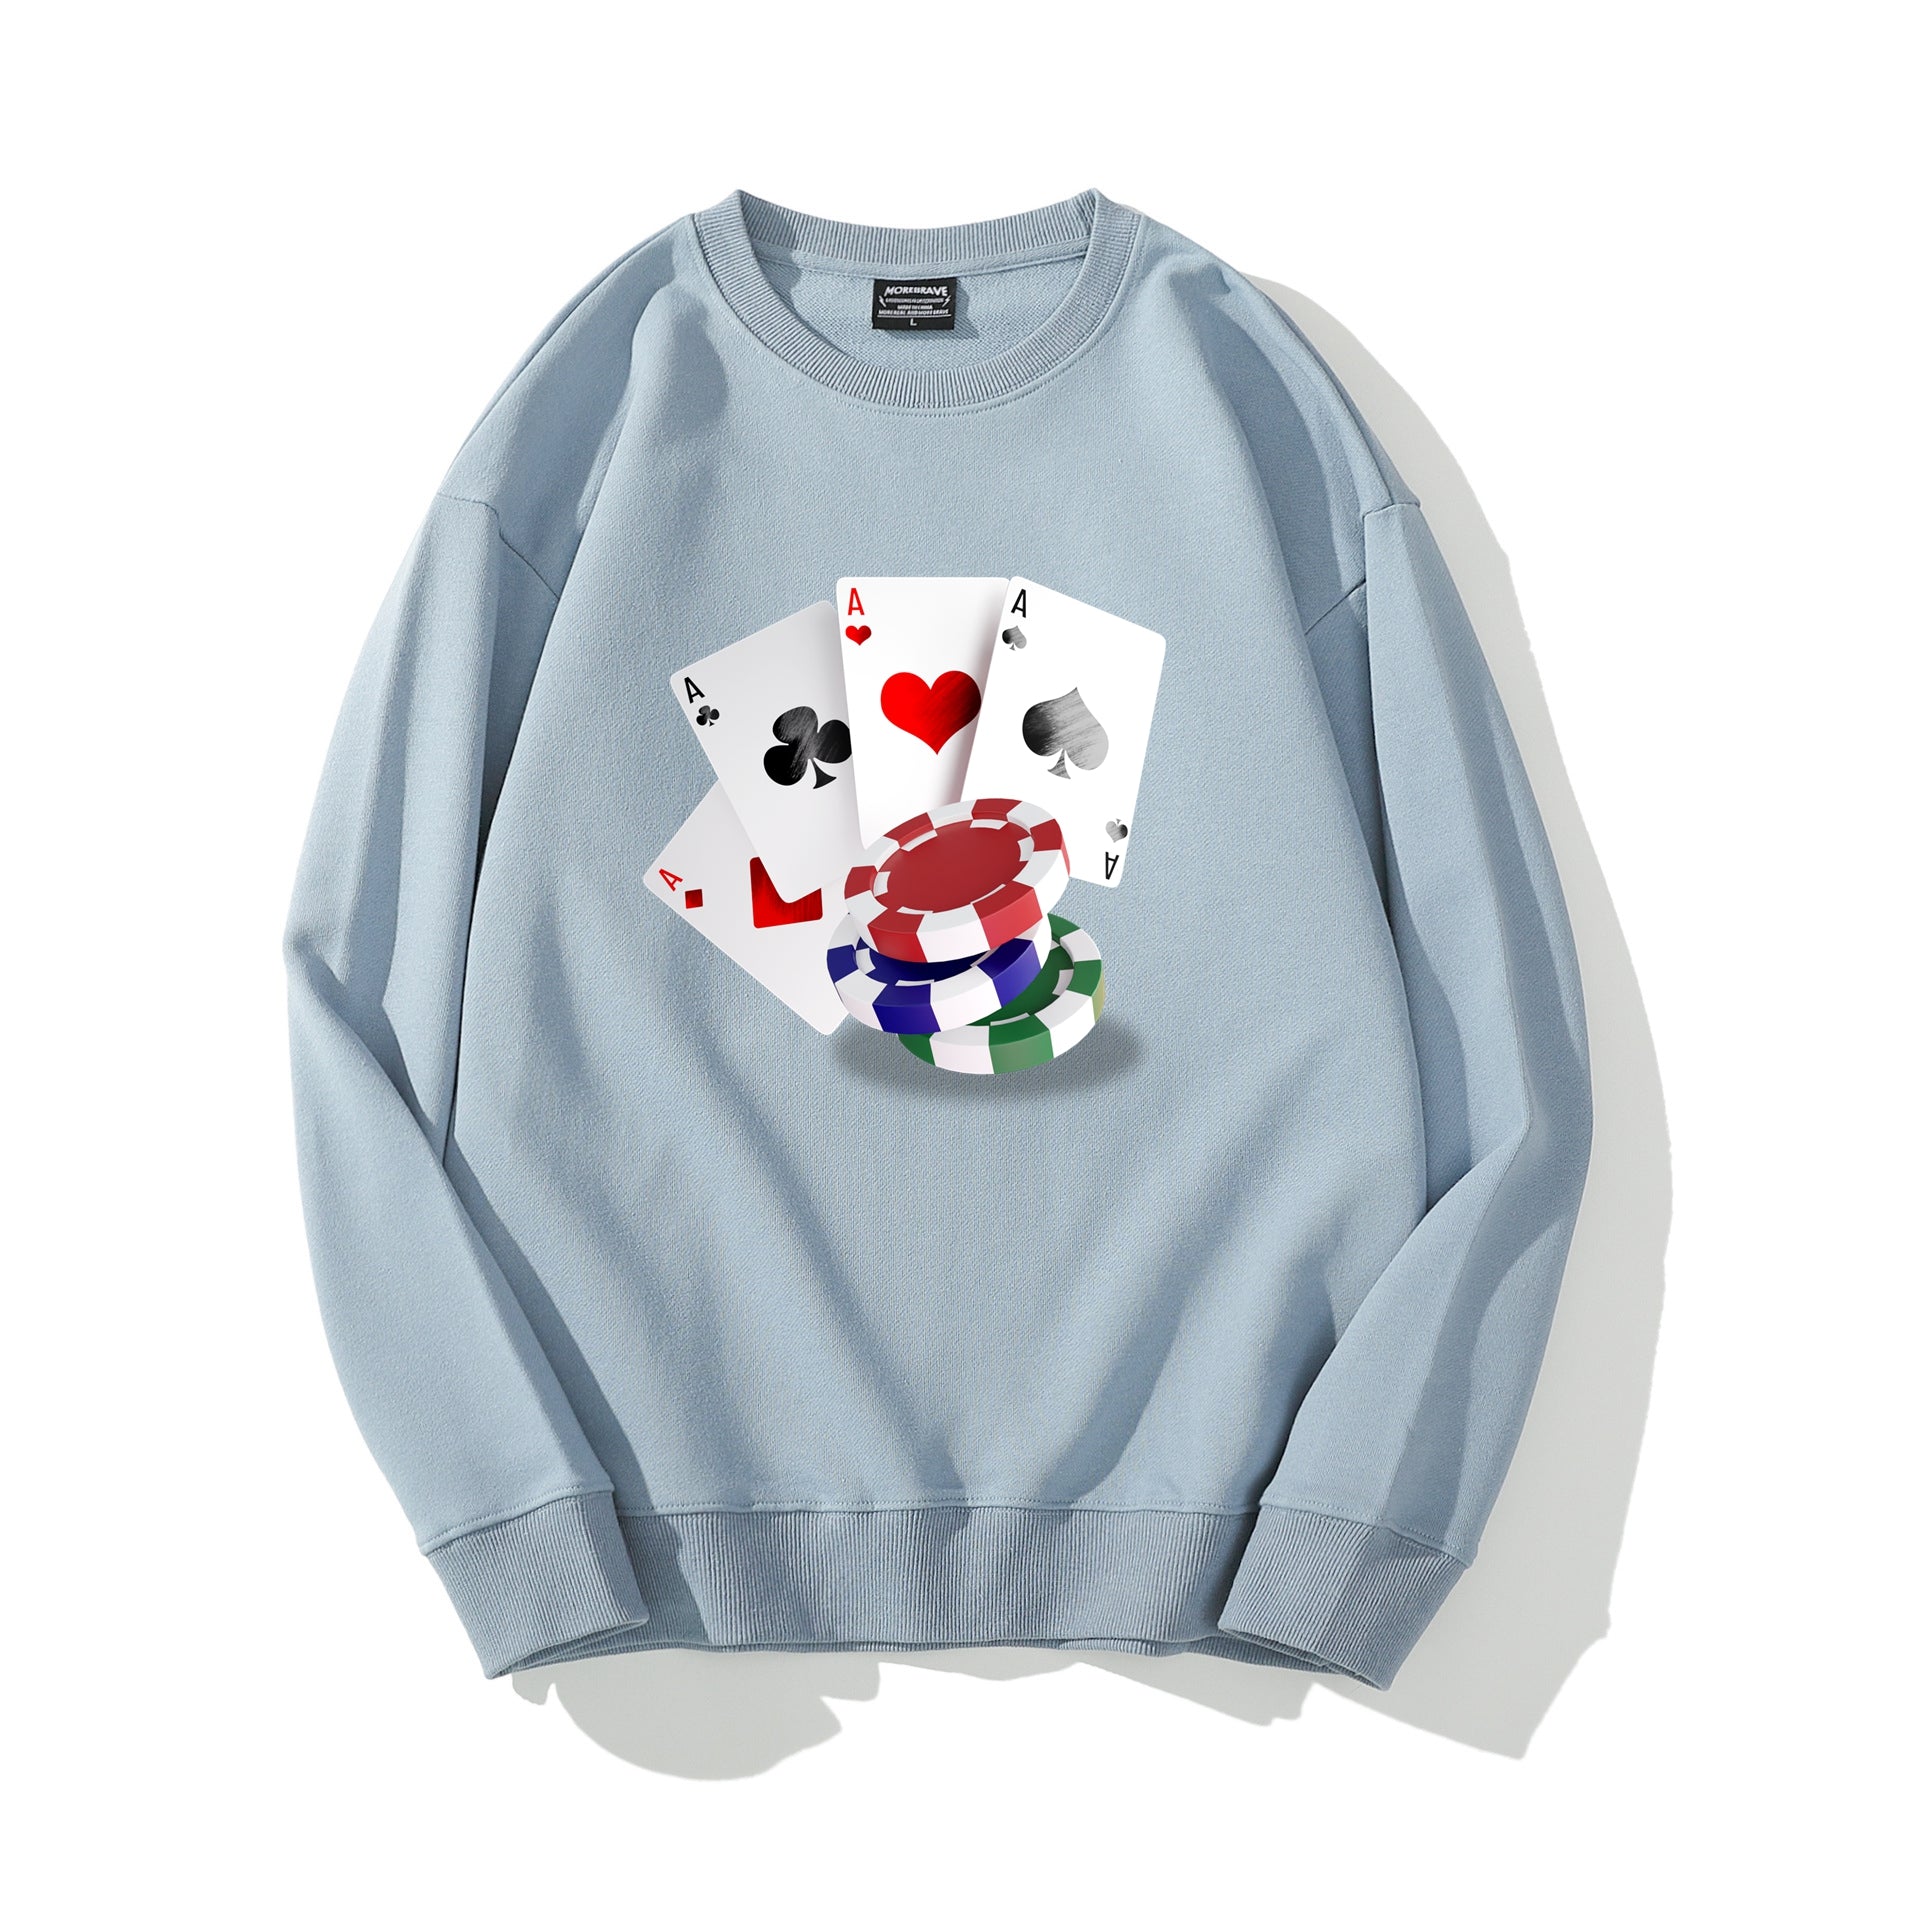 Men Poker Sweatshirt 4 Aces Graphic Printed Sweater Trendy Tops